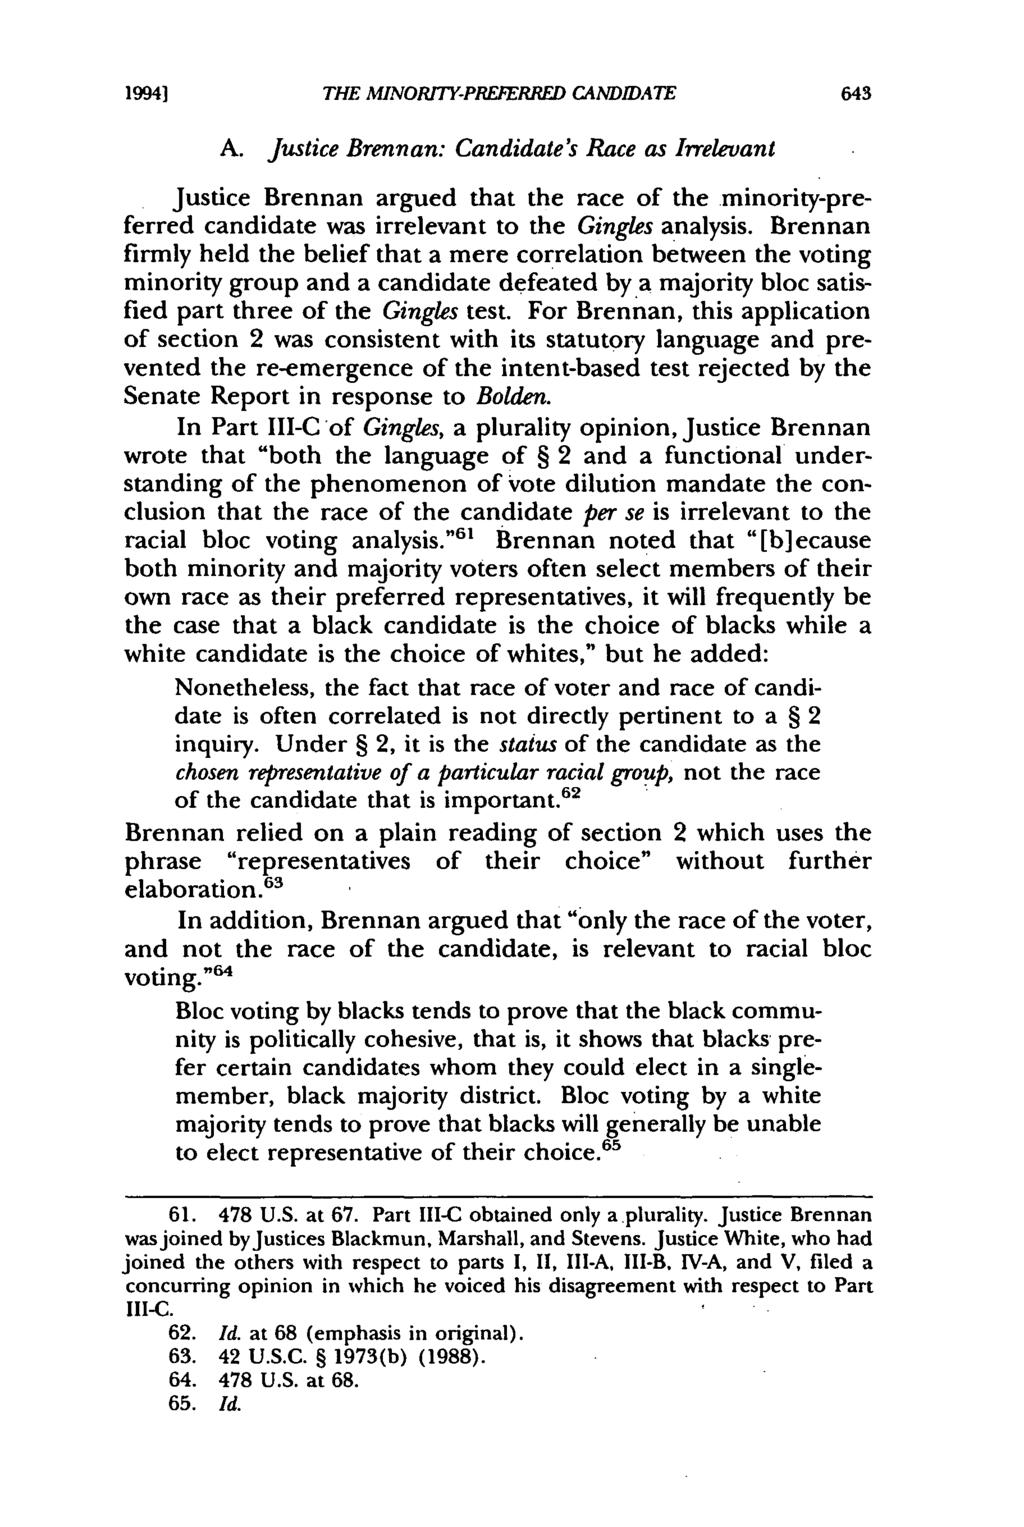 19941 THE MINORI-PREFERRED CANDIDATE A. Justice Brennan: Candidate's Race as Irrelevant Justice Brennan argued that the race of the minority-preferred candidate was irrelevant to the Gingles analysis.